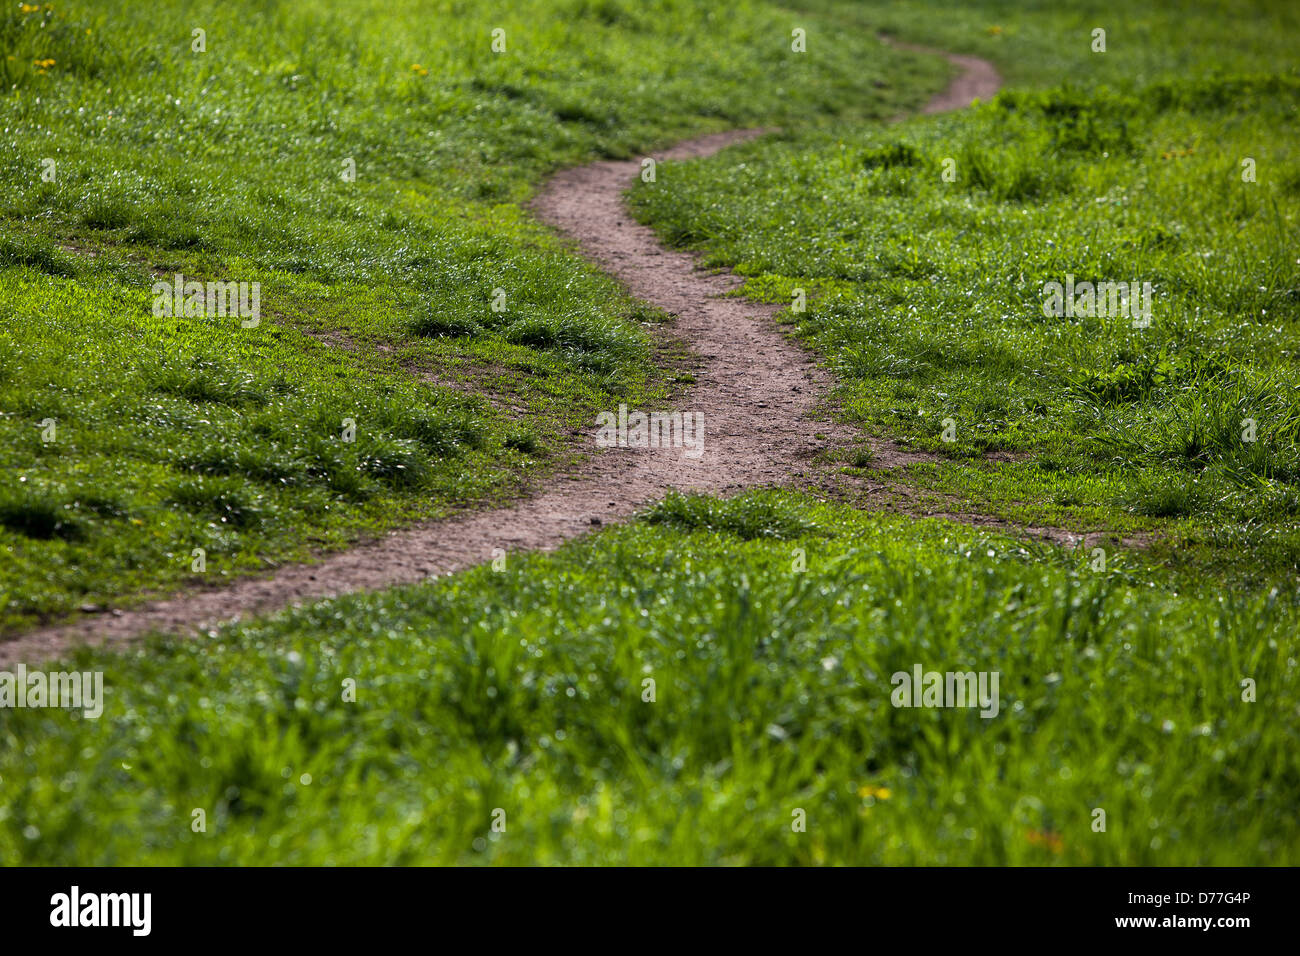 Footpath in the grass field landscape Czech Republic Europe grass field Stock Photo